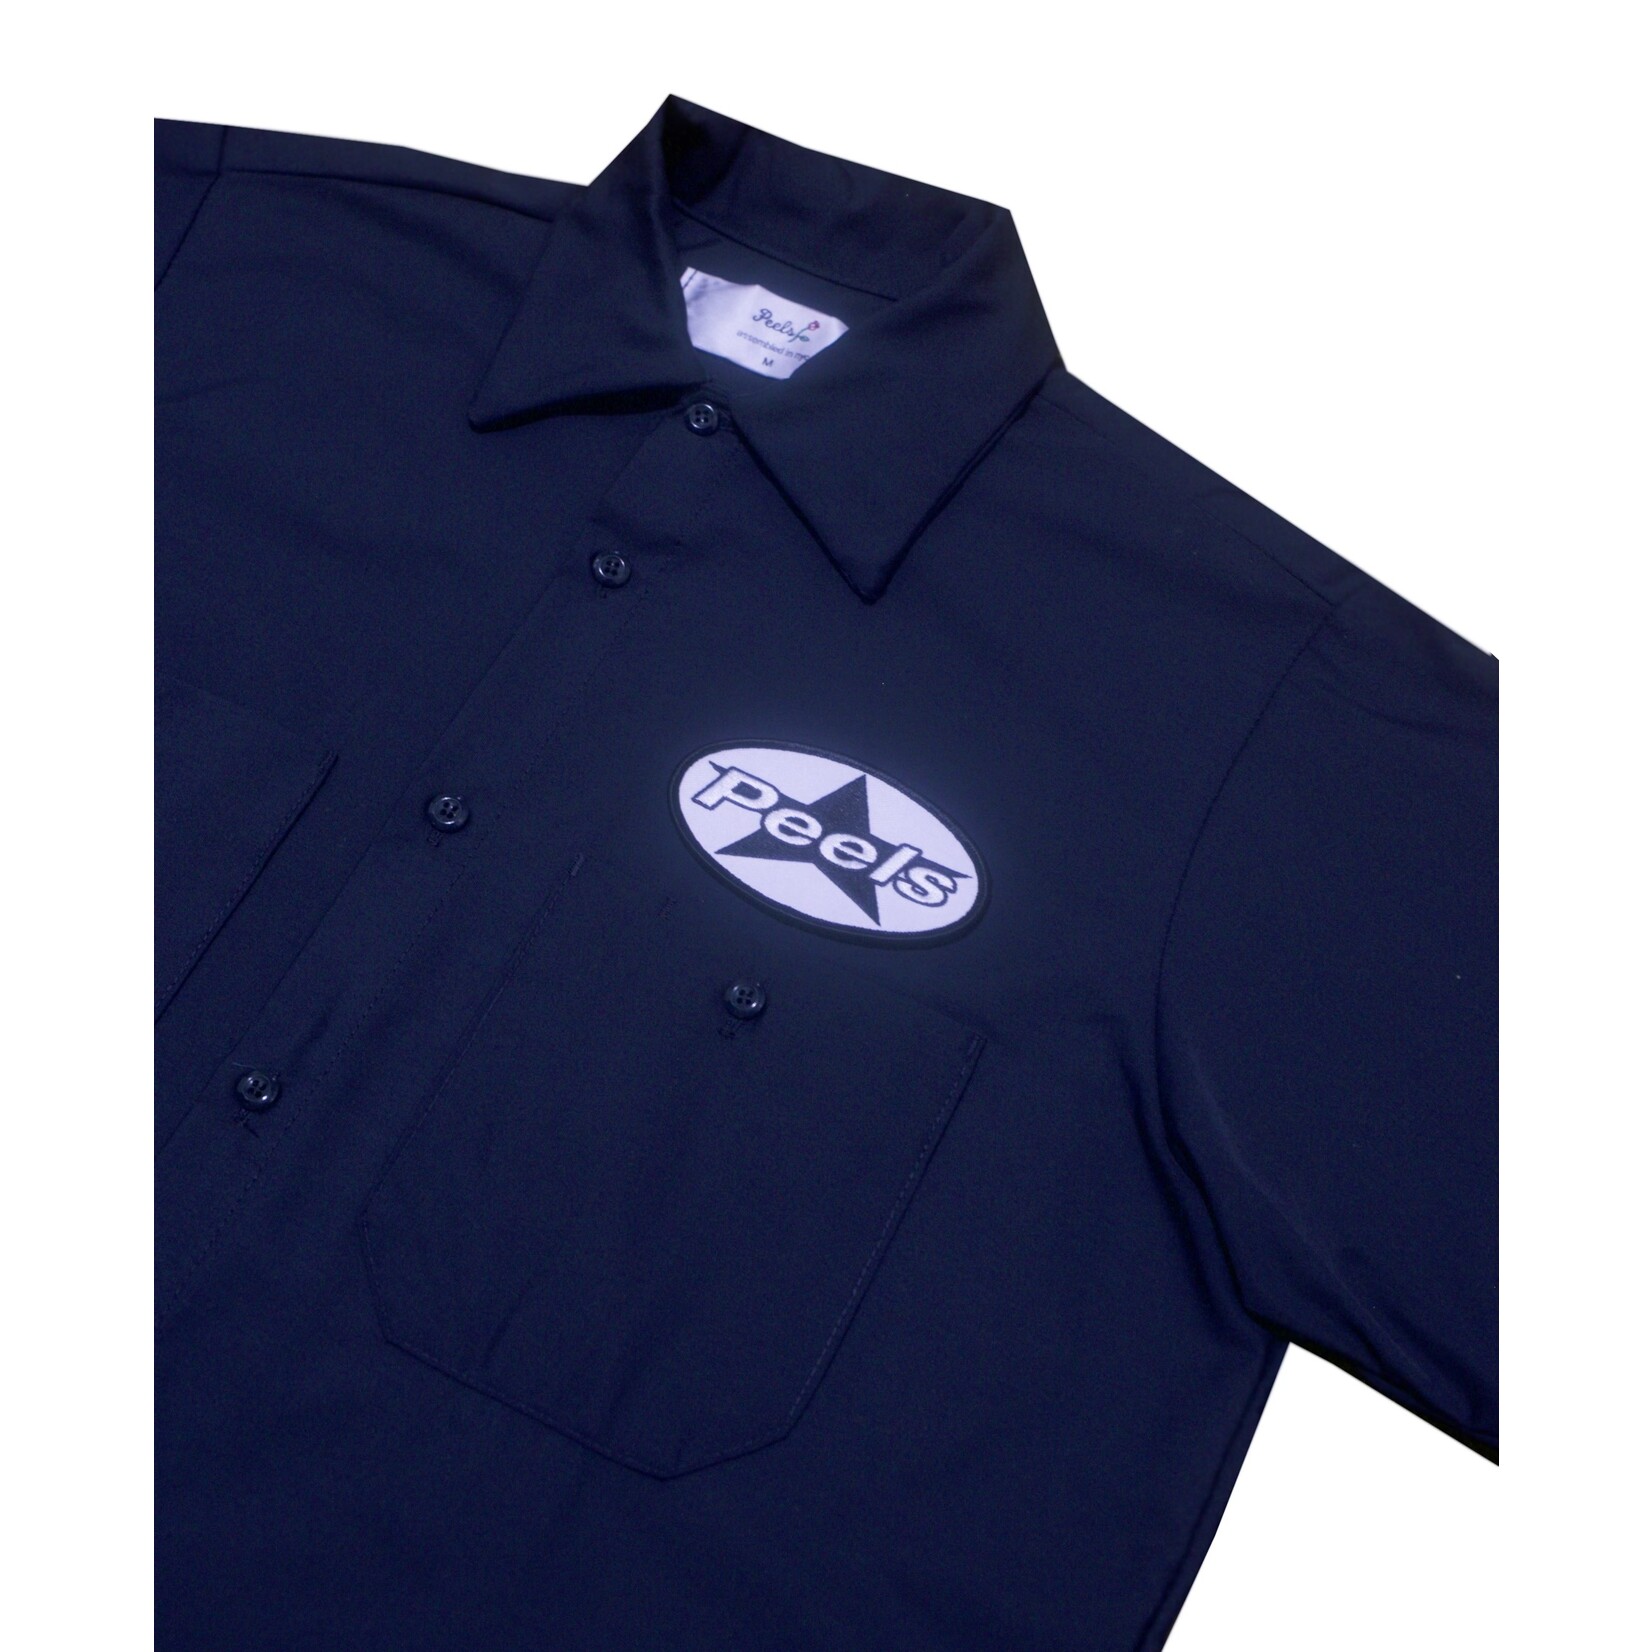 Peels NYC Peels Navy Work Shirt W/Star Patch